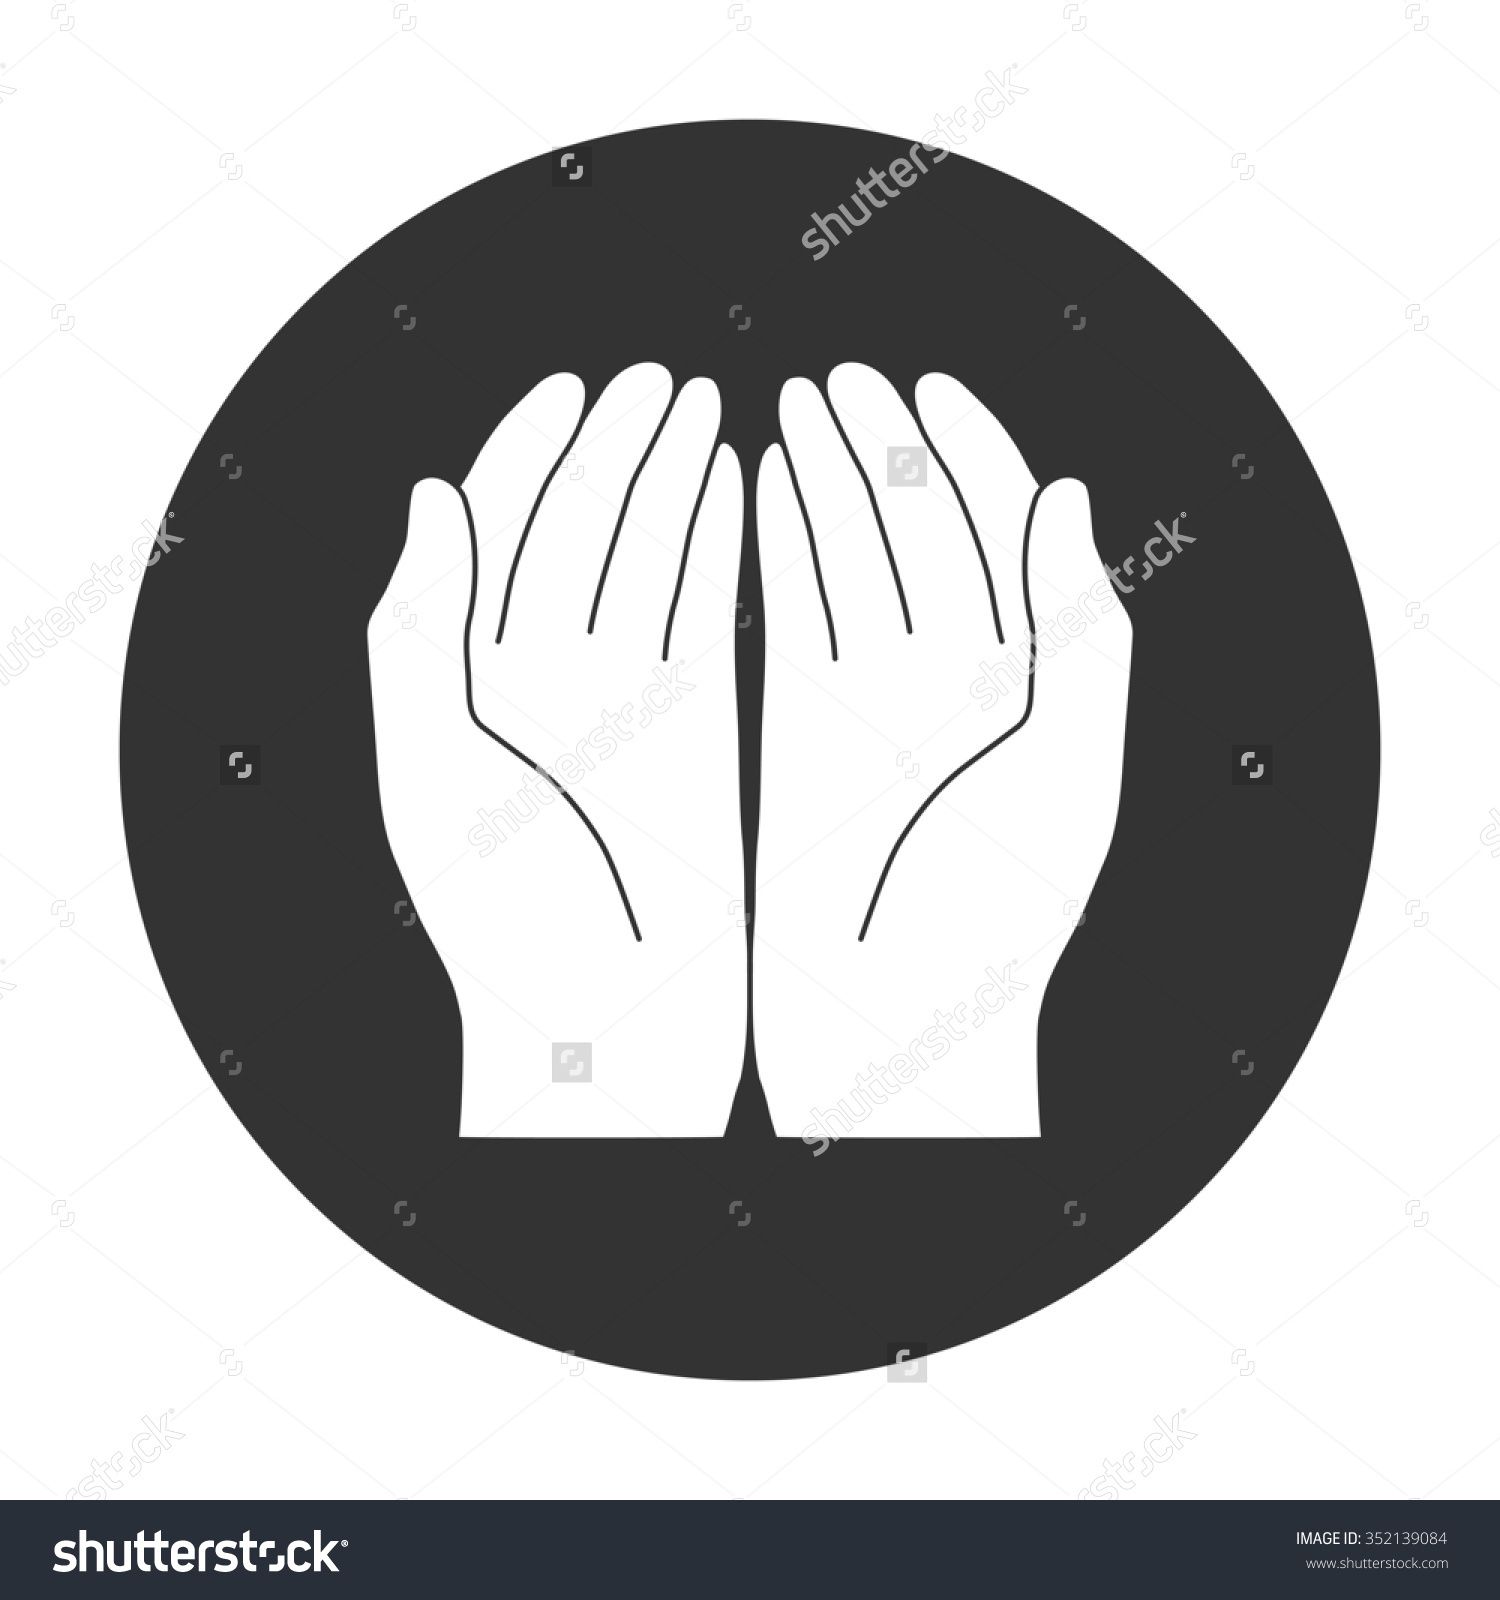 Hand,Gesture,Finger,Black-and-white,Illustration,Circle,Symbol,Line art